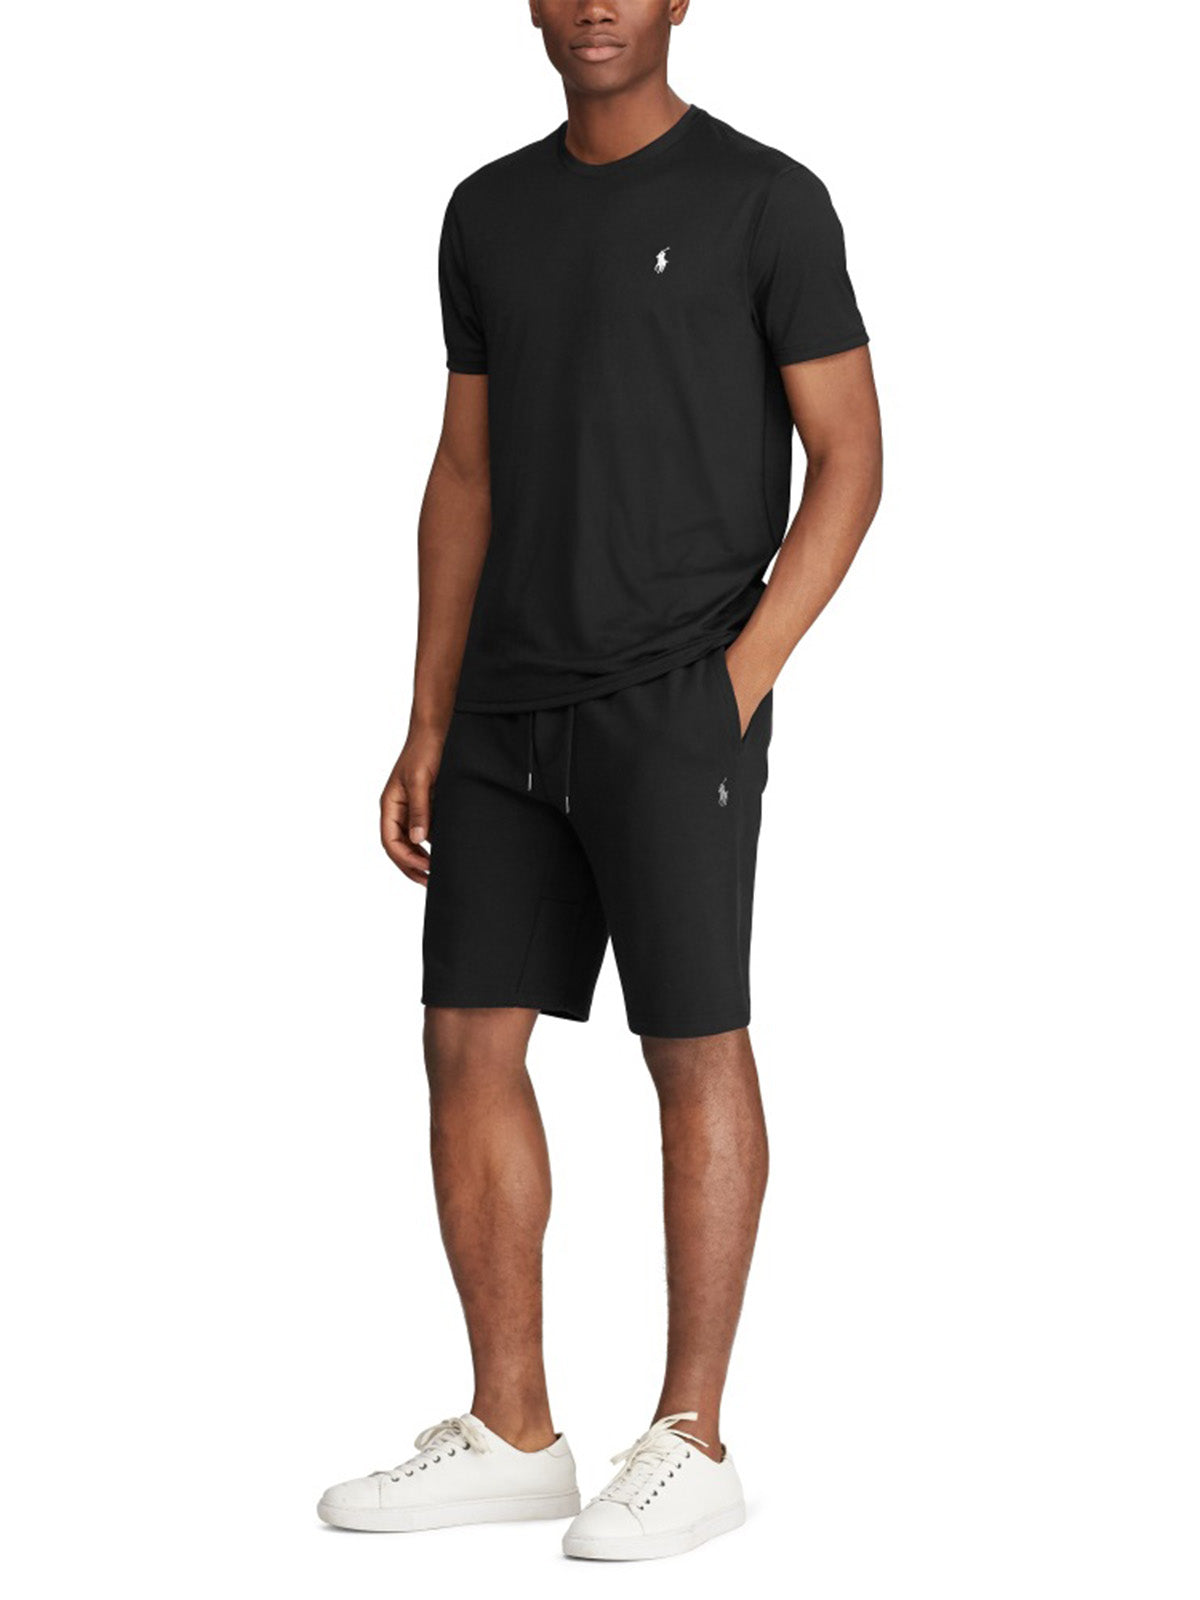 Ralph Lauren Men's Bermuda - Double Knit Tech Shorts - Black